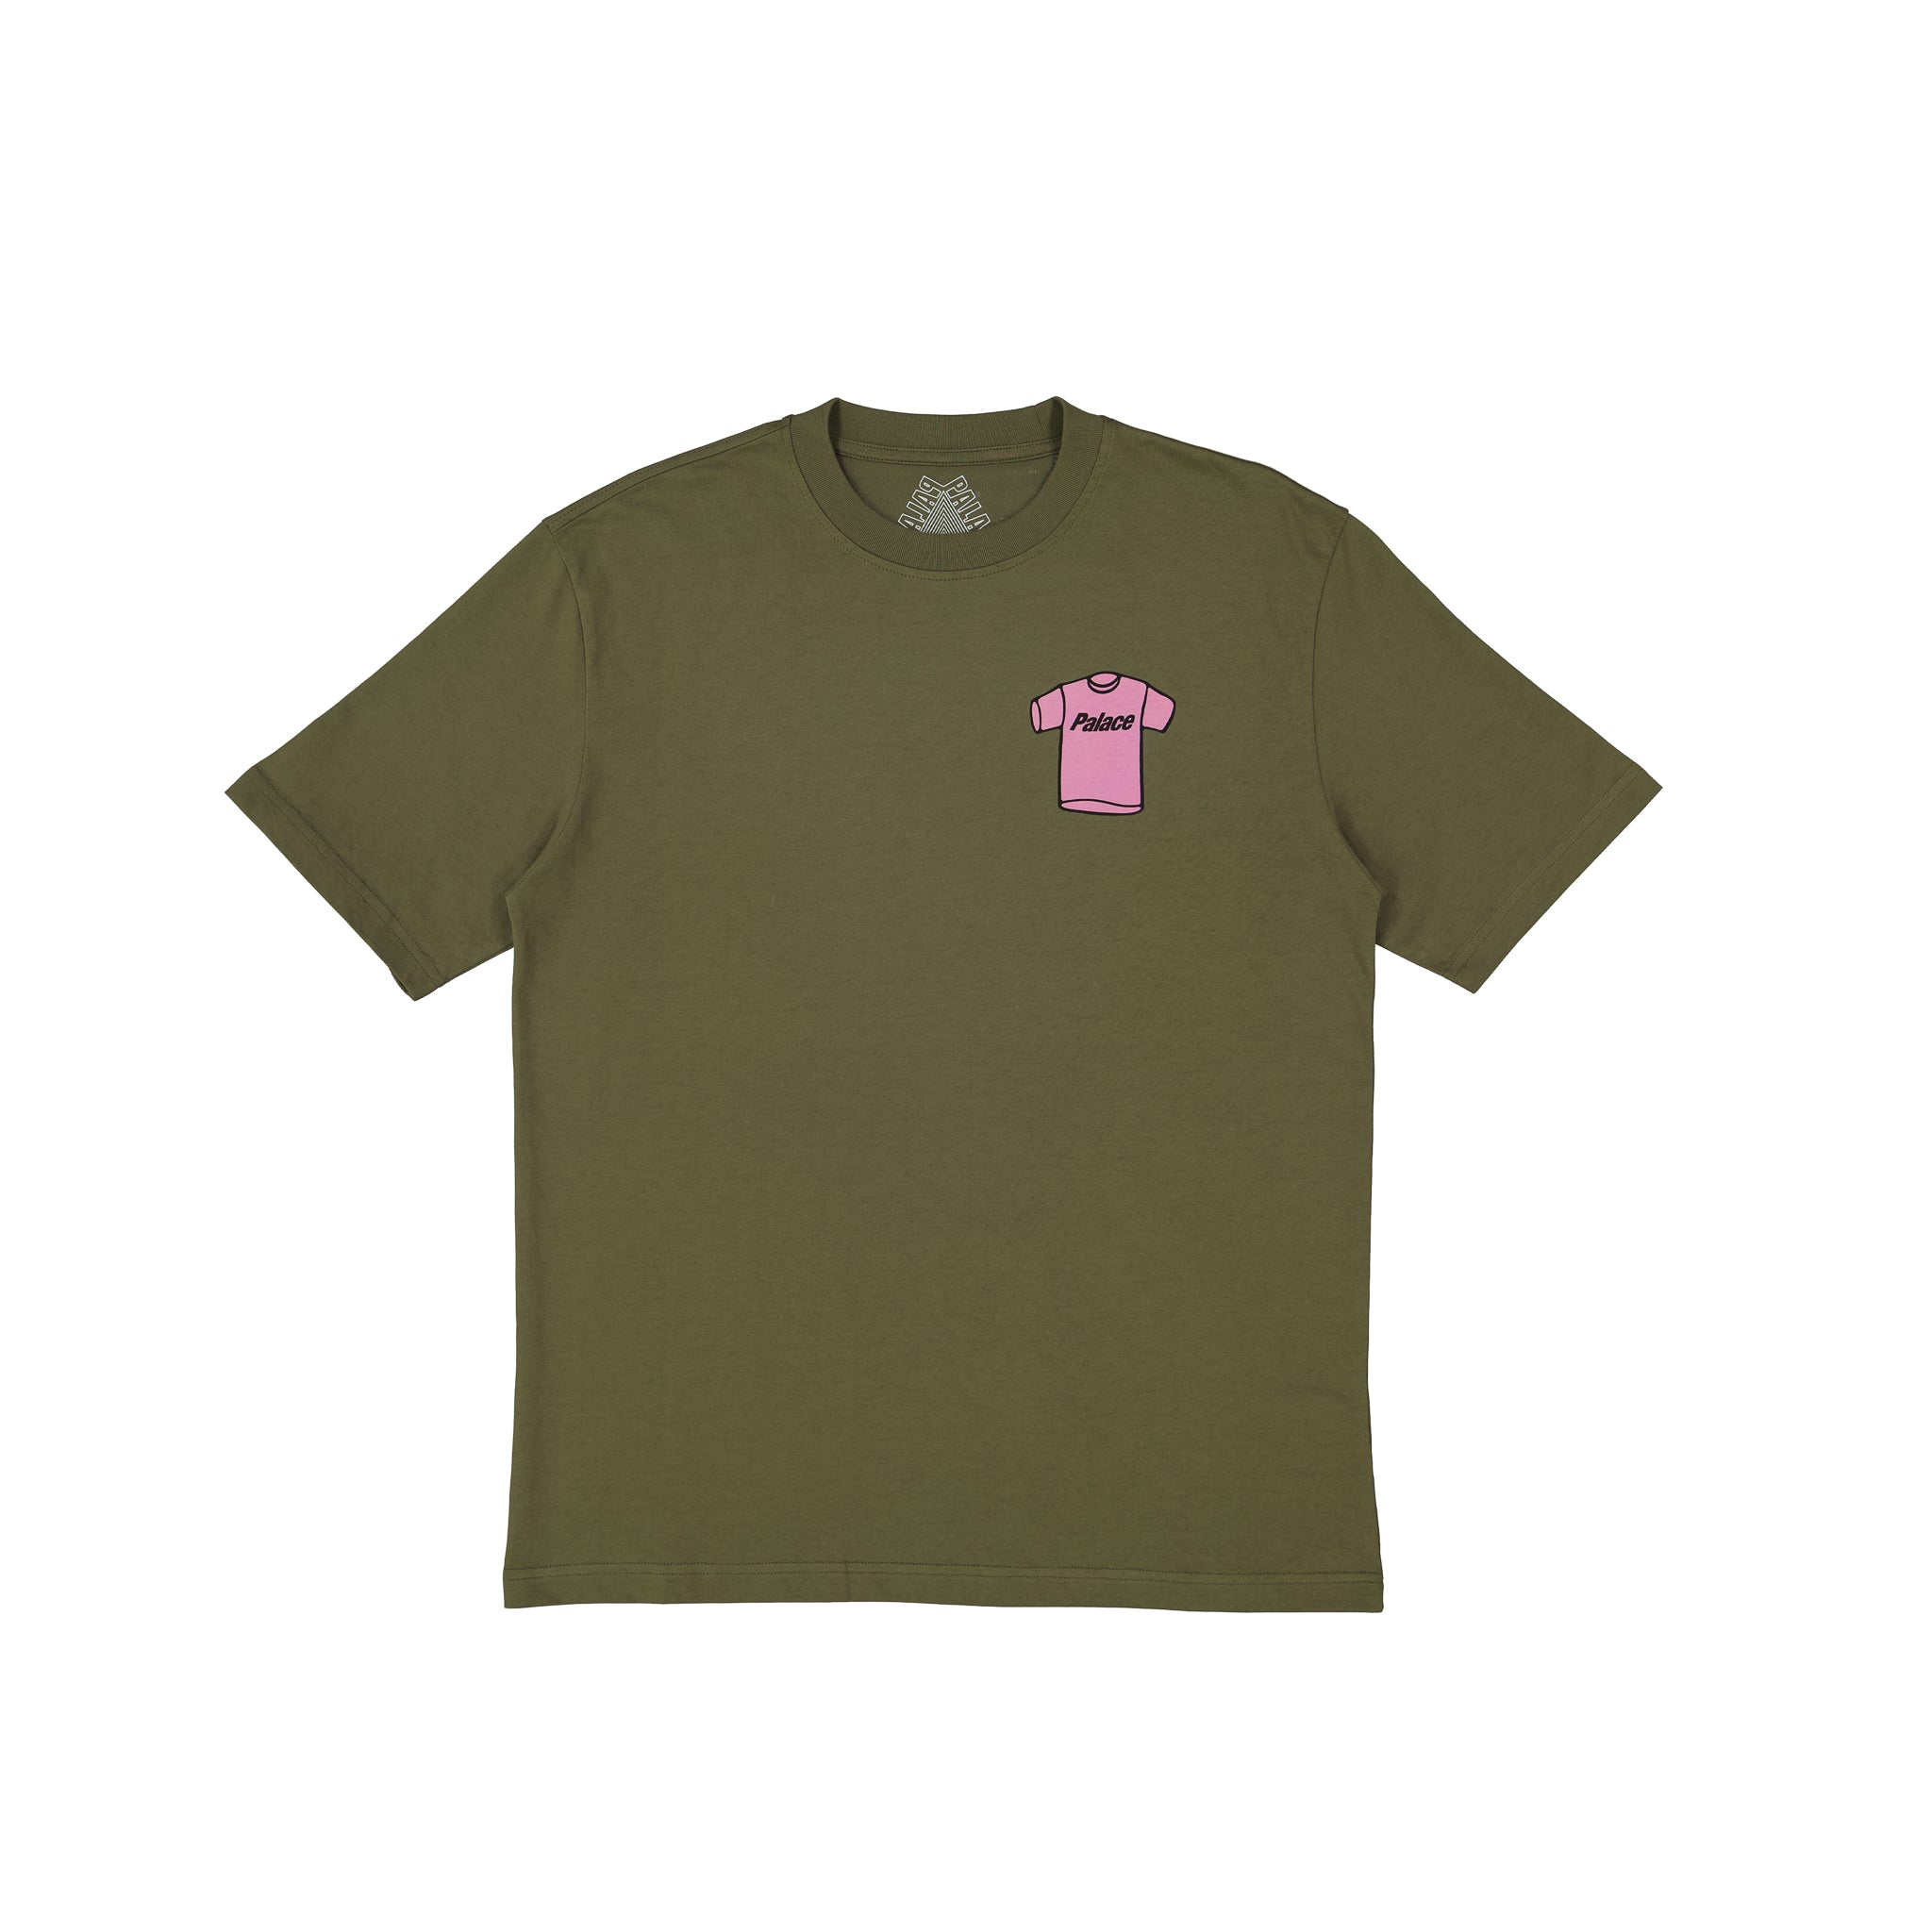 Palace T-Shirt T-Shirt Olive - SPRMRKT